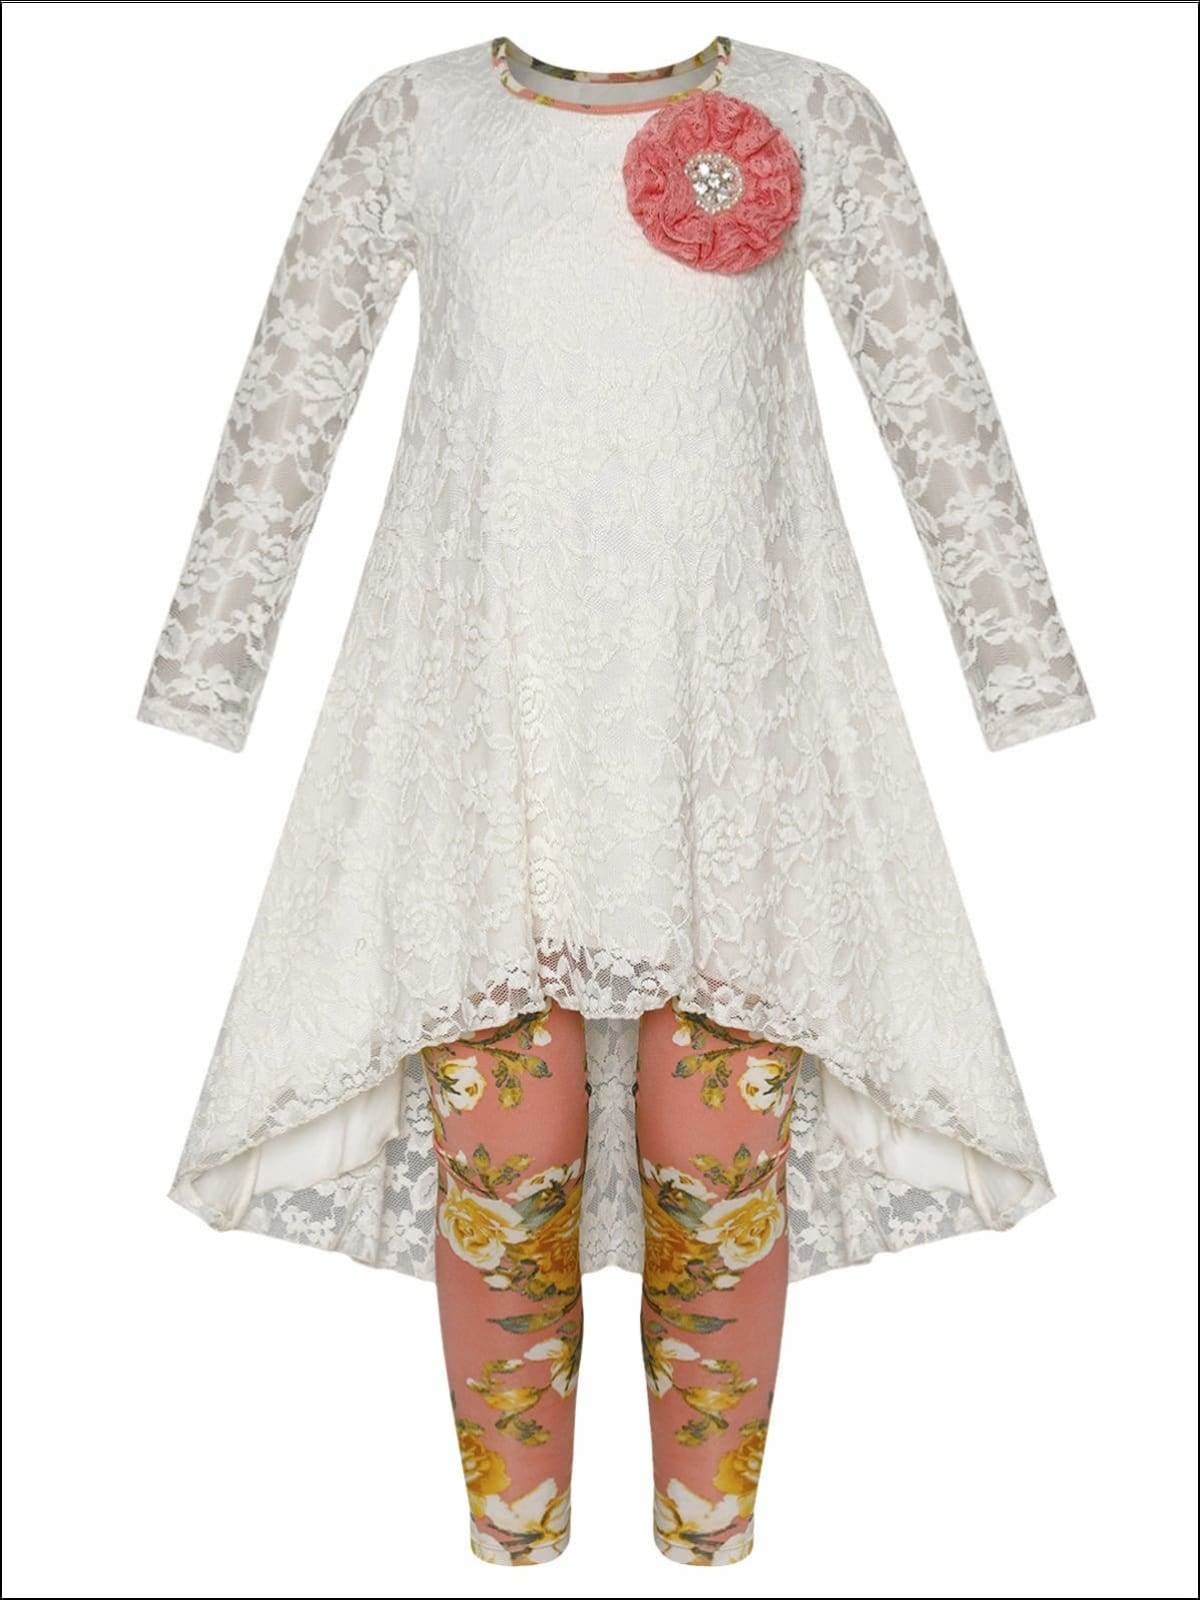 Girls Lace Hi-Lo Long Sleeve Tunic with Flower Trim & Printed Leggings Set - White / 2T/3T - Girls Fall Dressy Set